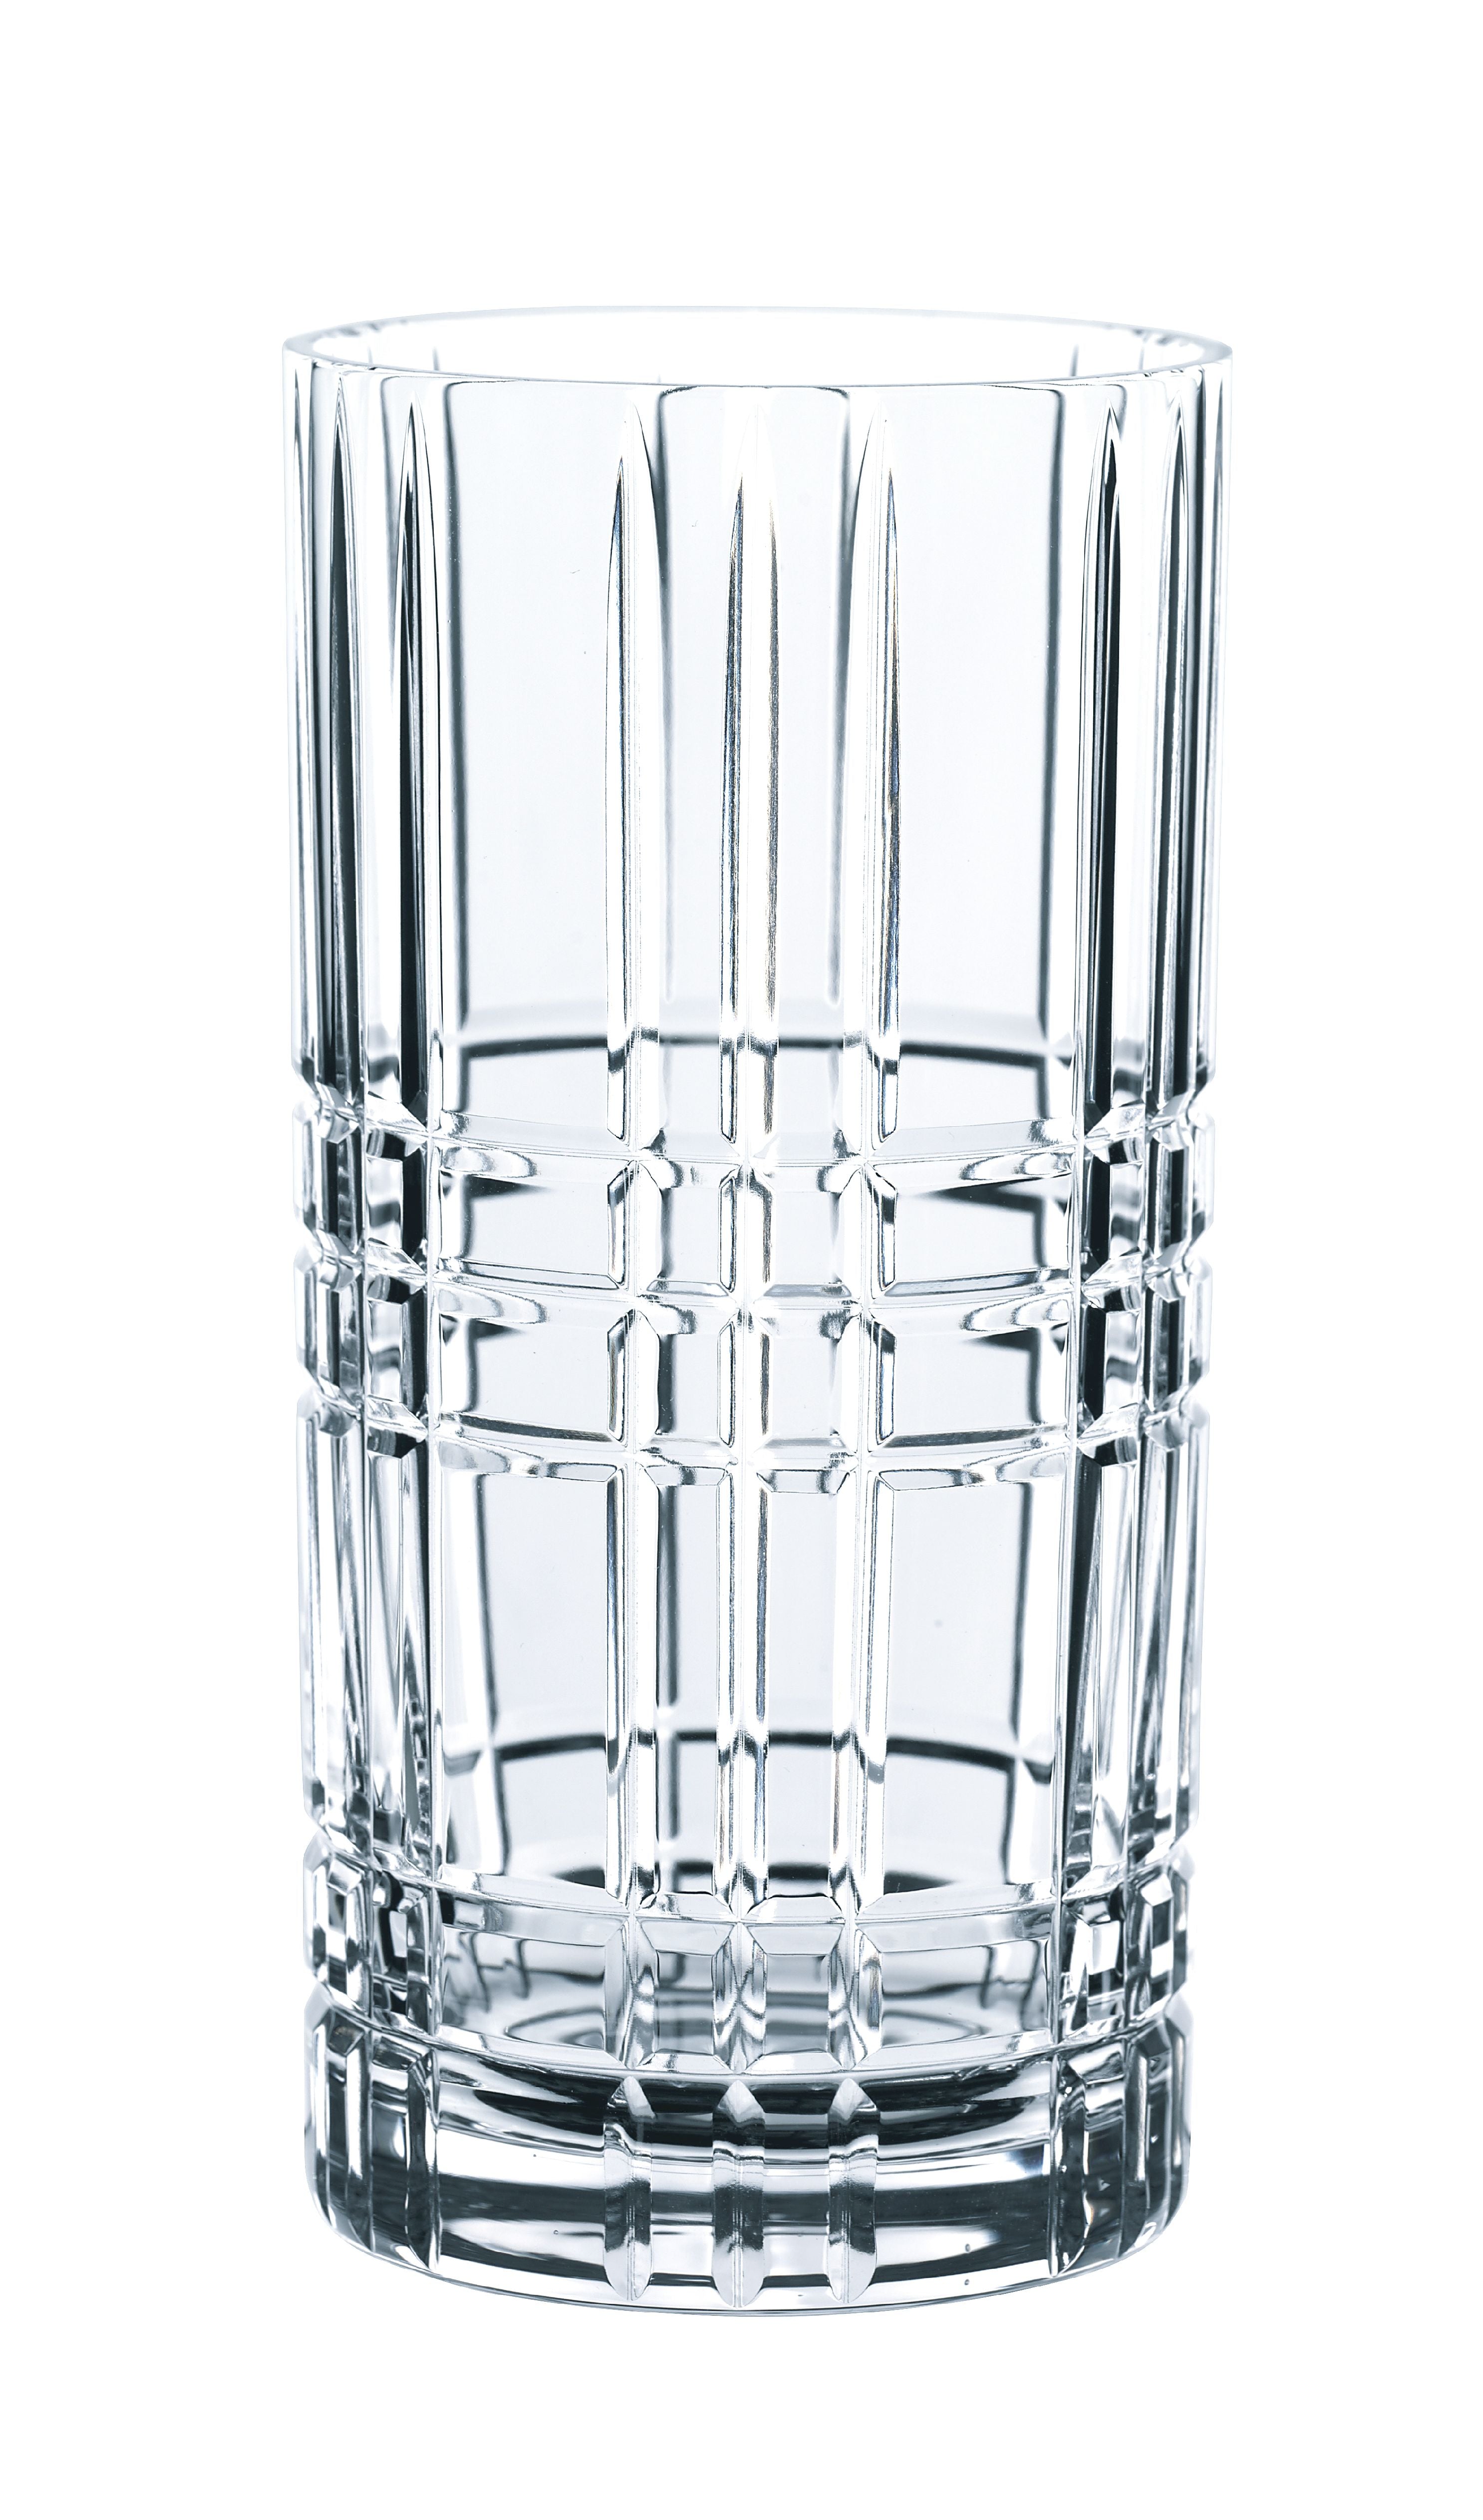 Nachtmann Highland Long Drink Glas 445 ml, 4er-Set